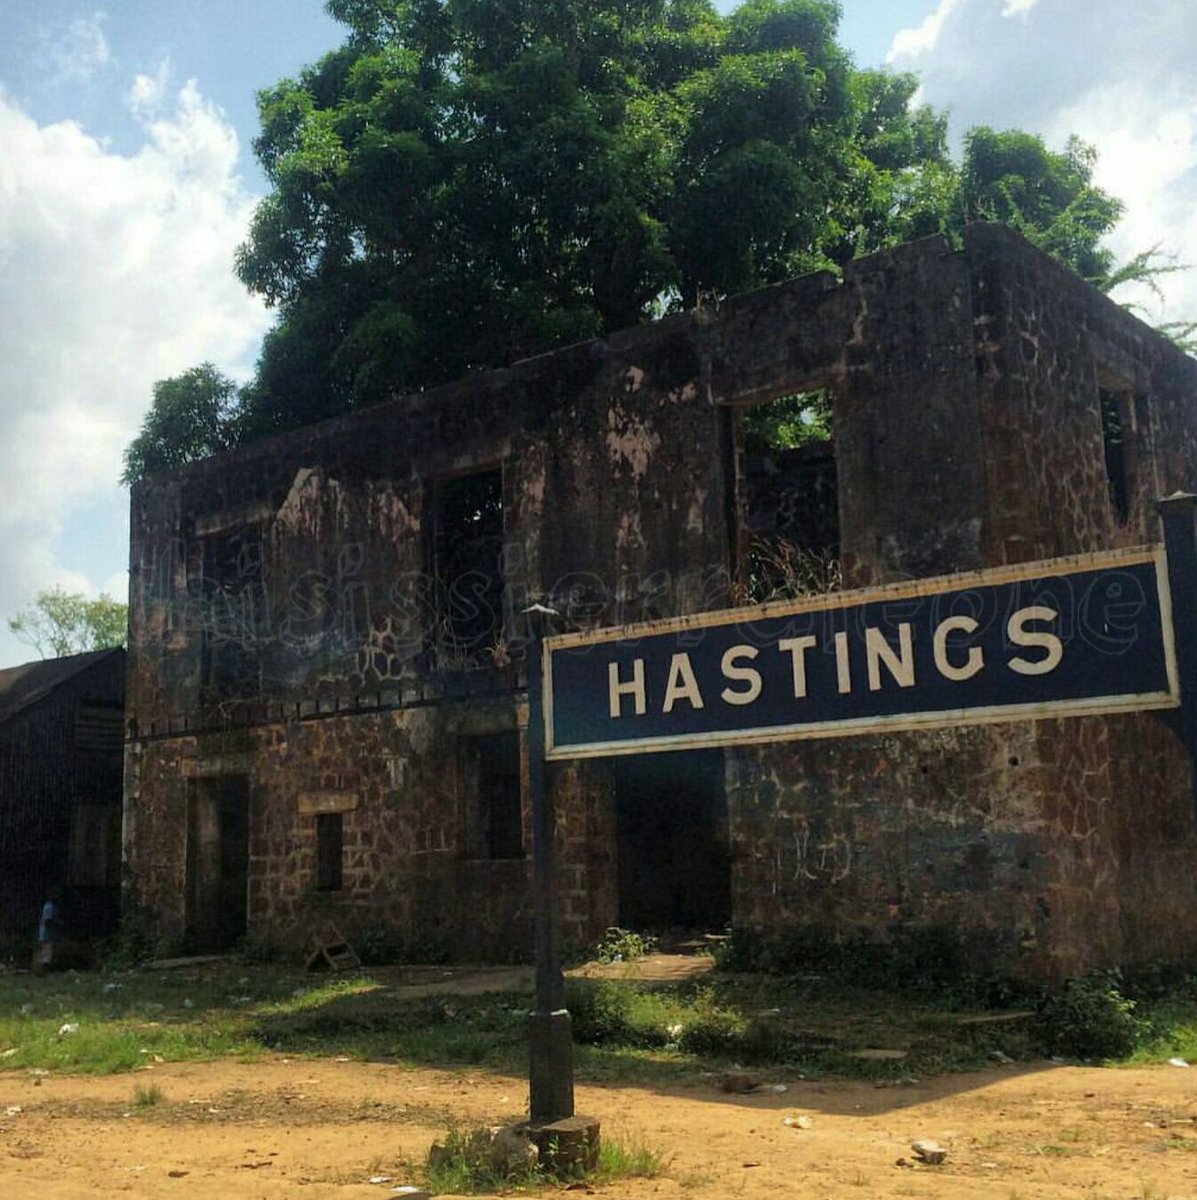 Places... Sierra Leone Edition. 
#thisissierraleone #Hastings #exploresierraleone #africa